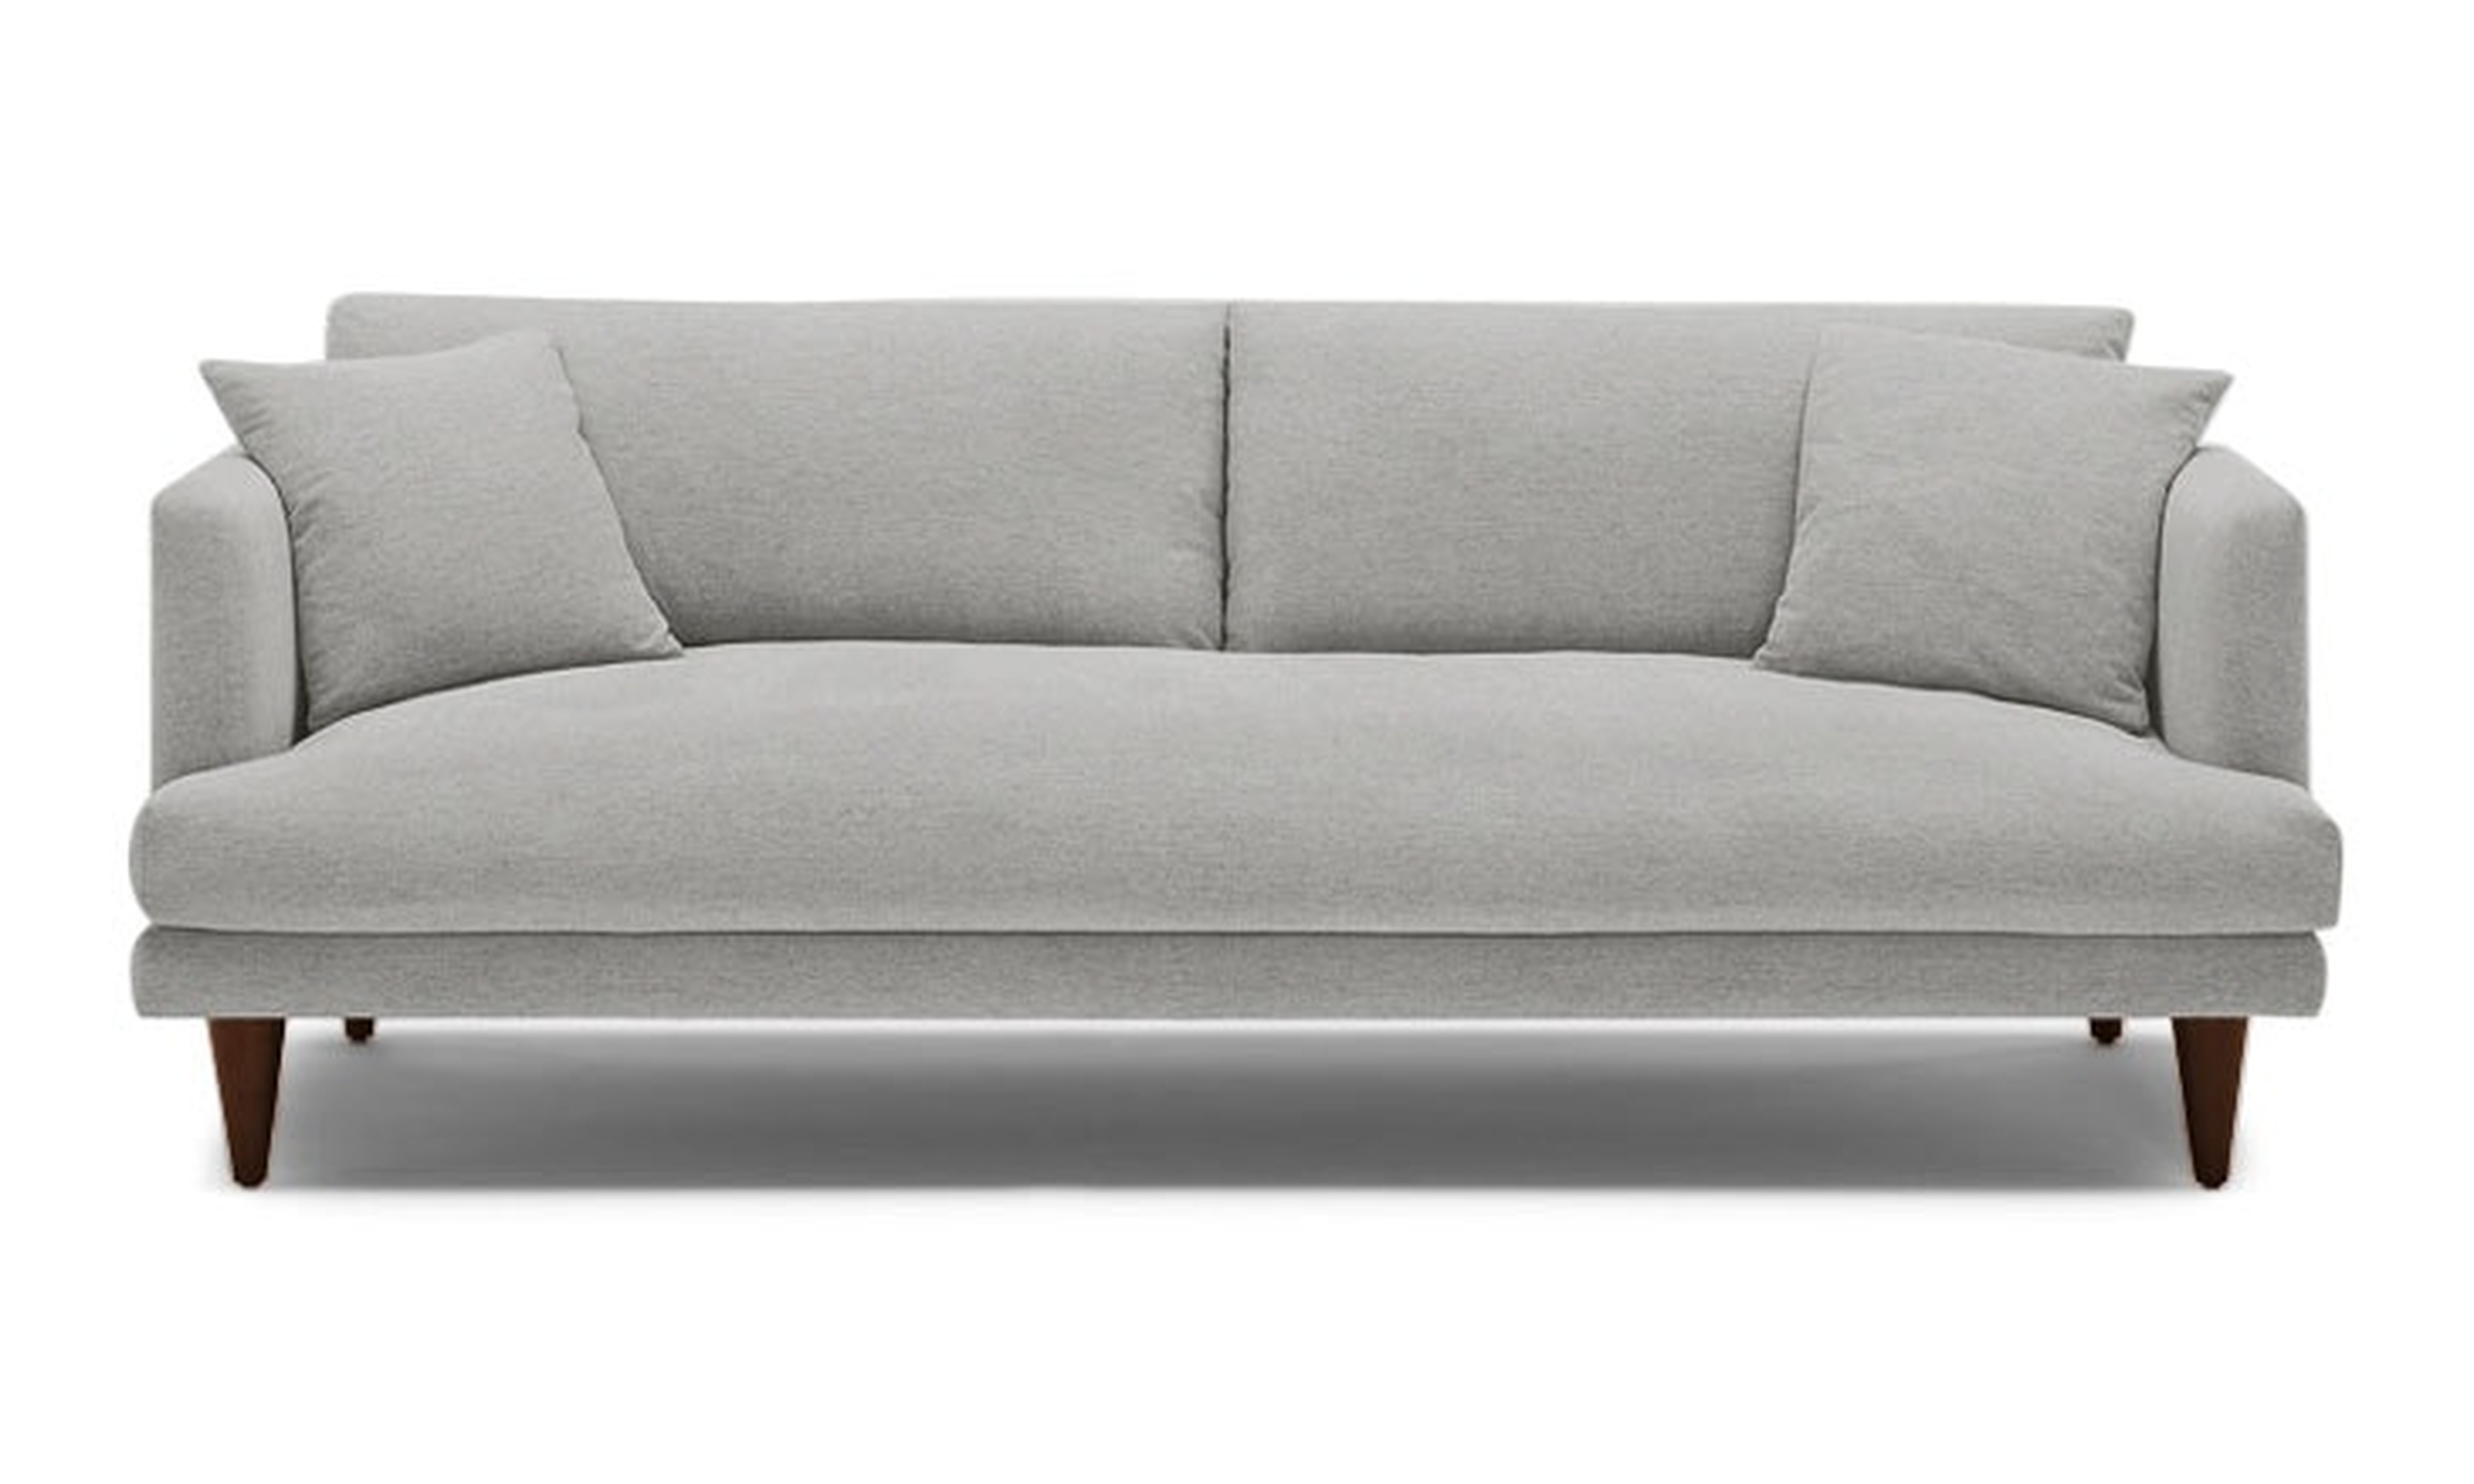 Gray Lewis Mid Century Modern Sofa - Sunbrella Premier Fog - Medium - Cone Legs - Joybird